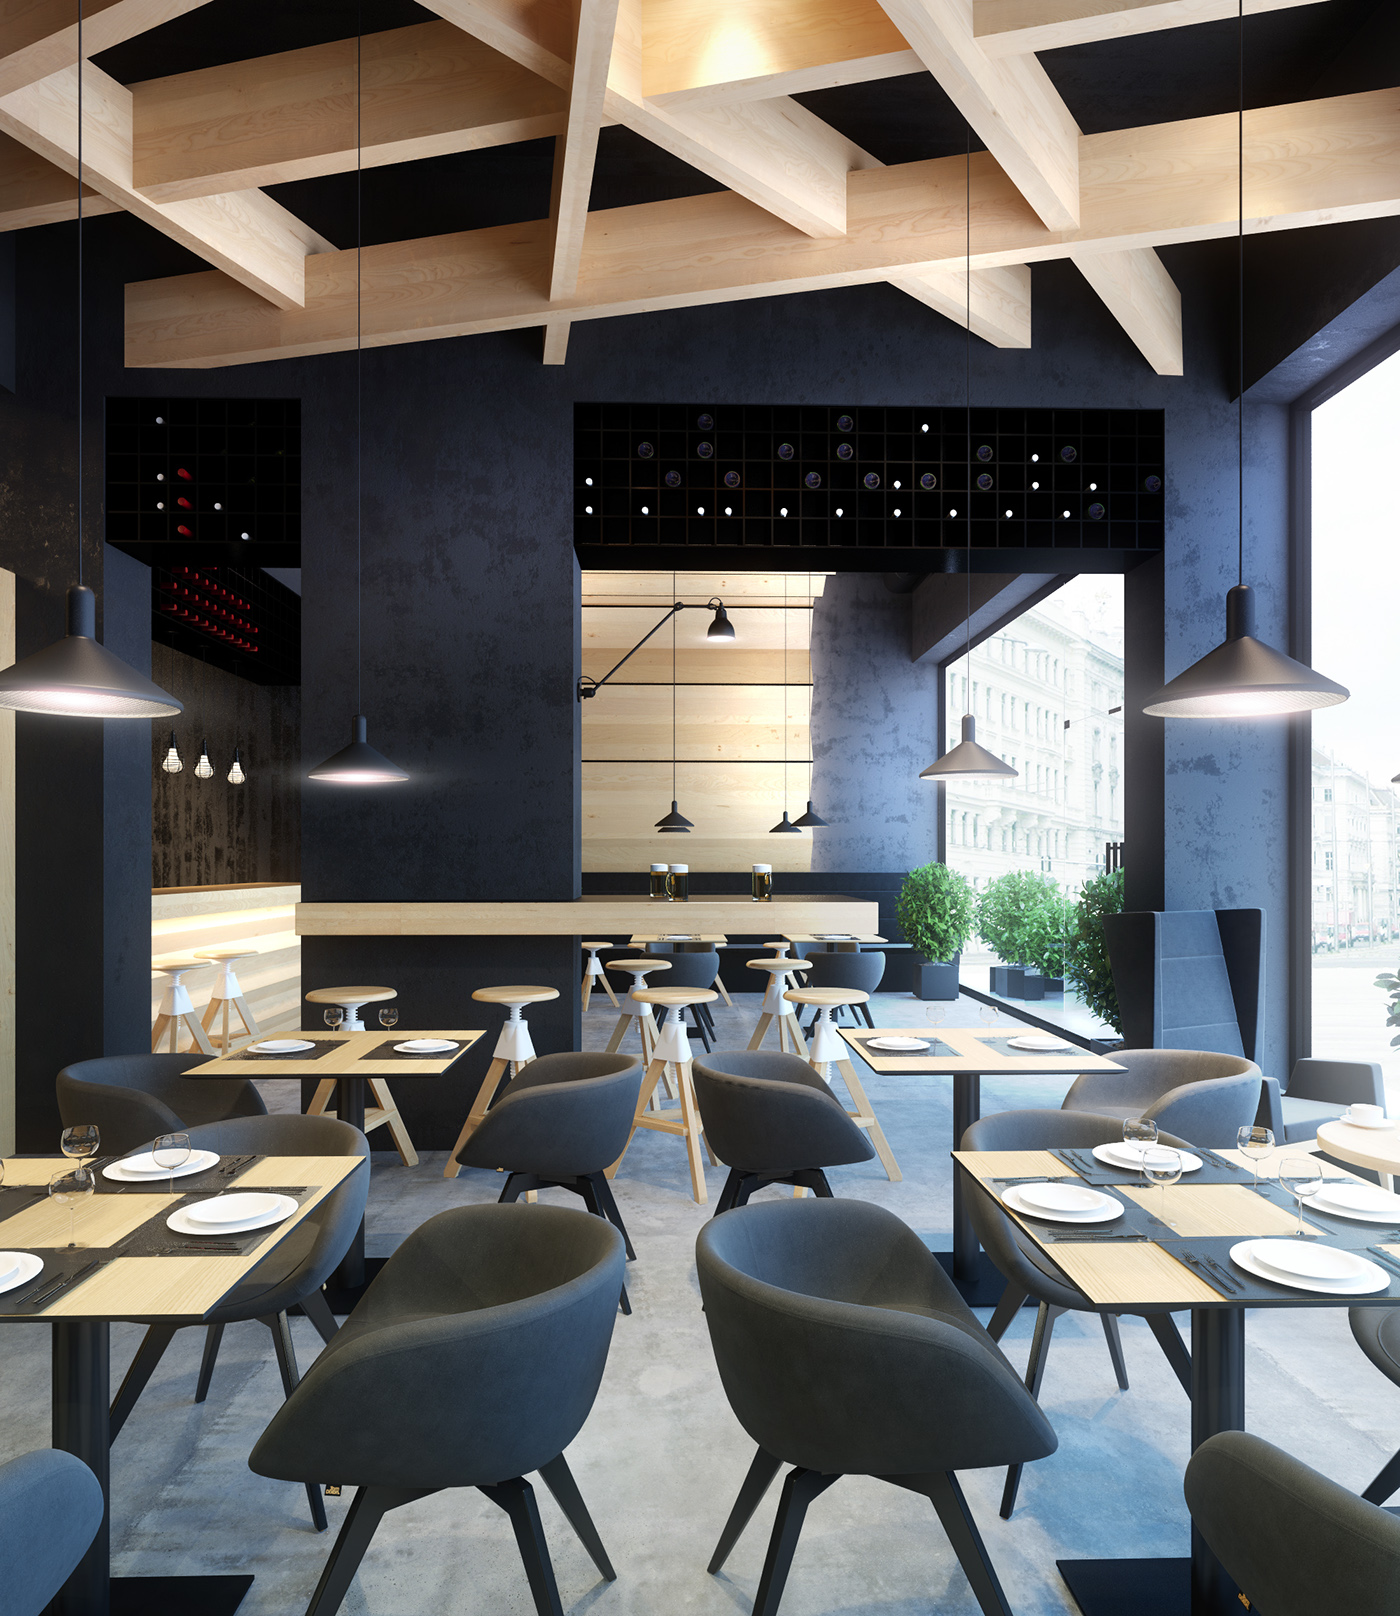 caffee design visualization 3D Bristol rendering art restaurant cafe bar